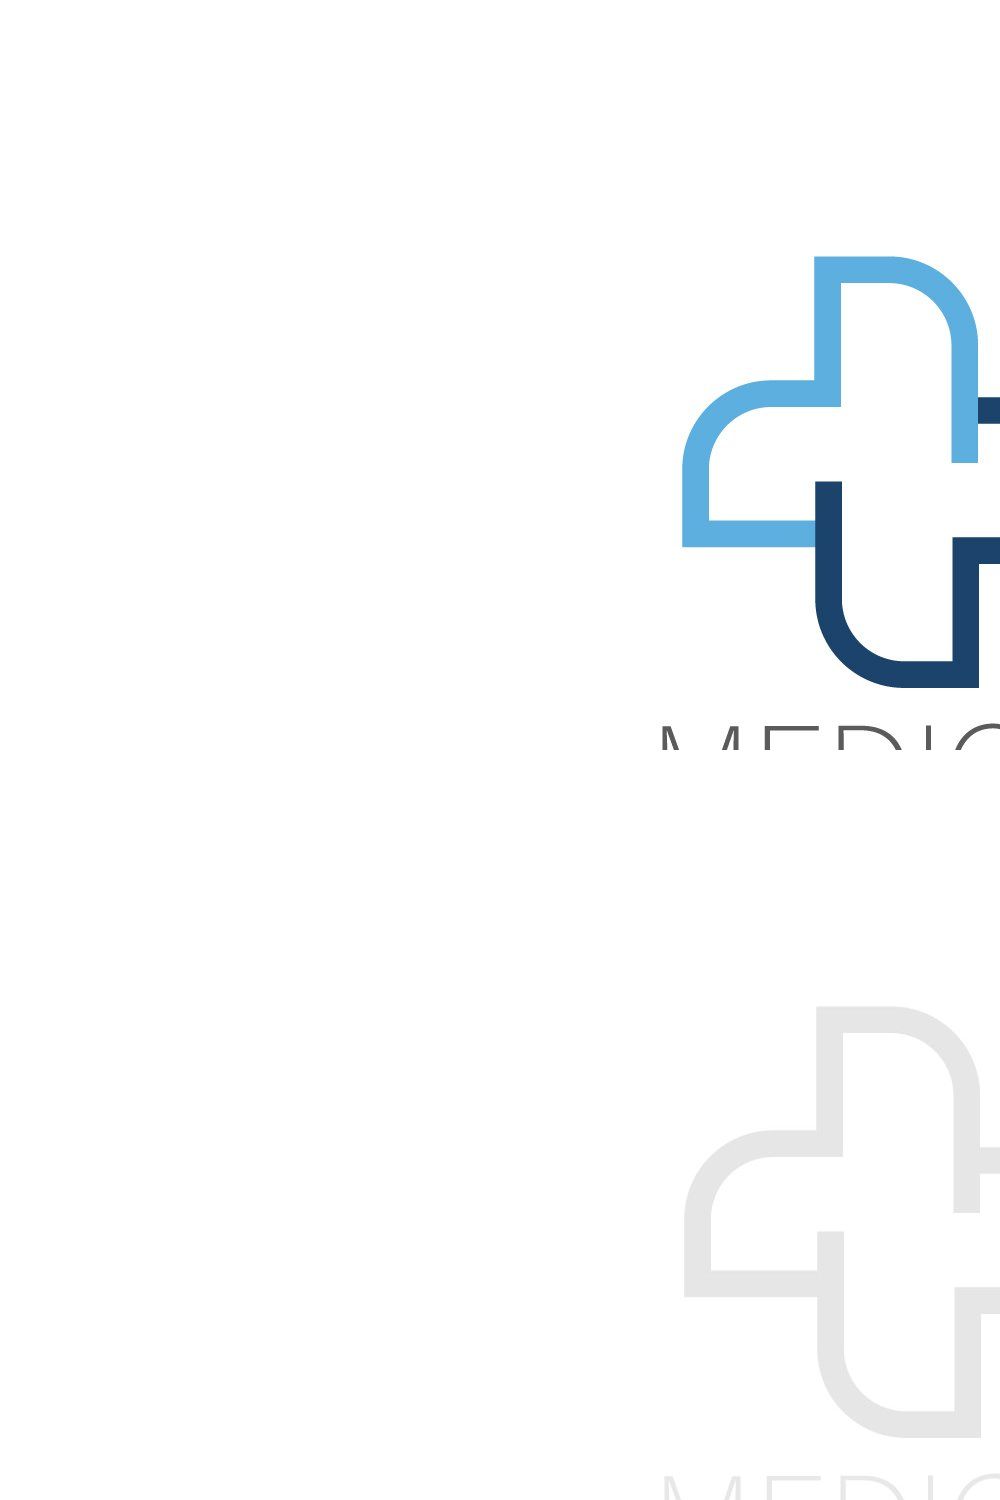 Medical logo pinterest preview image.